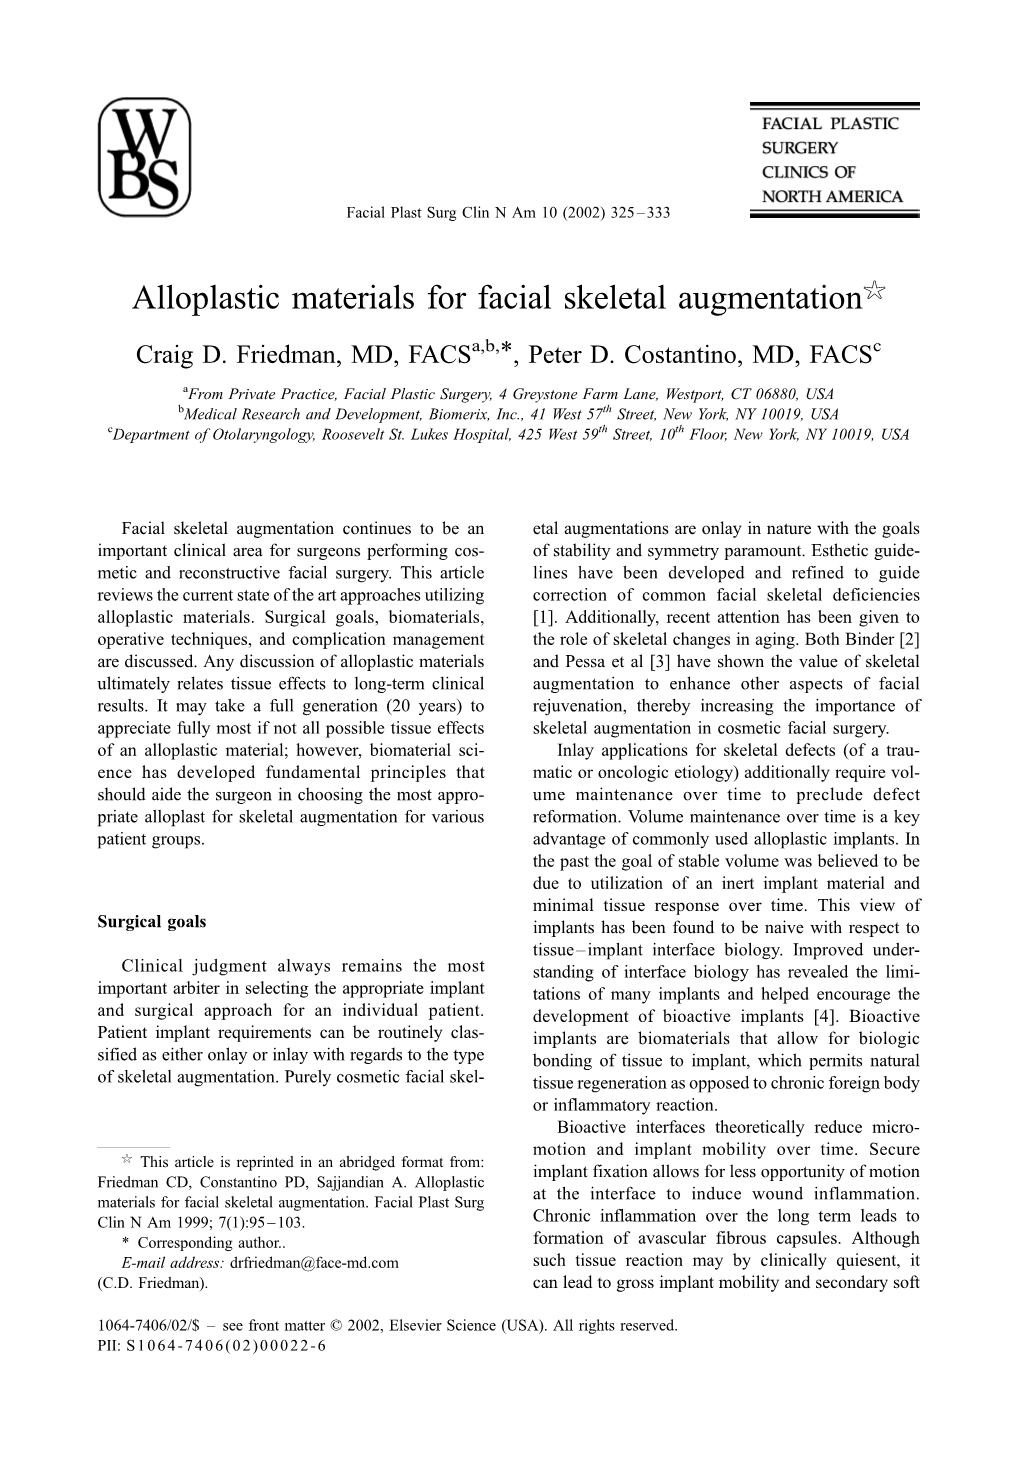 Alloplastic Materials for Facial Skeletal Augmentation$